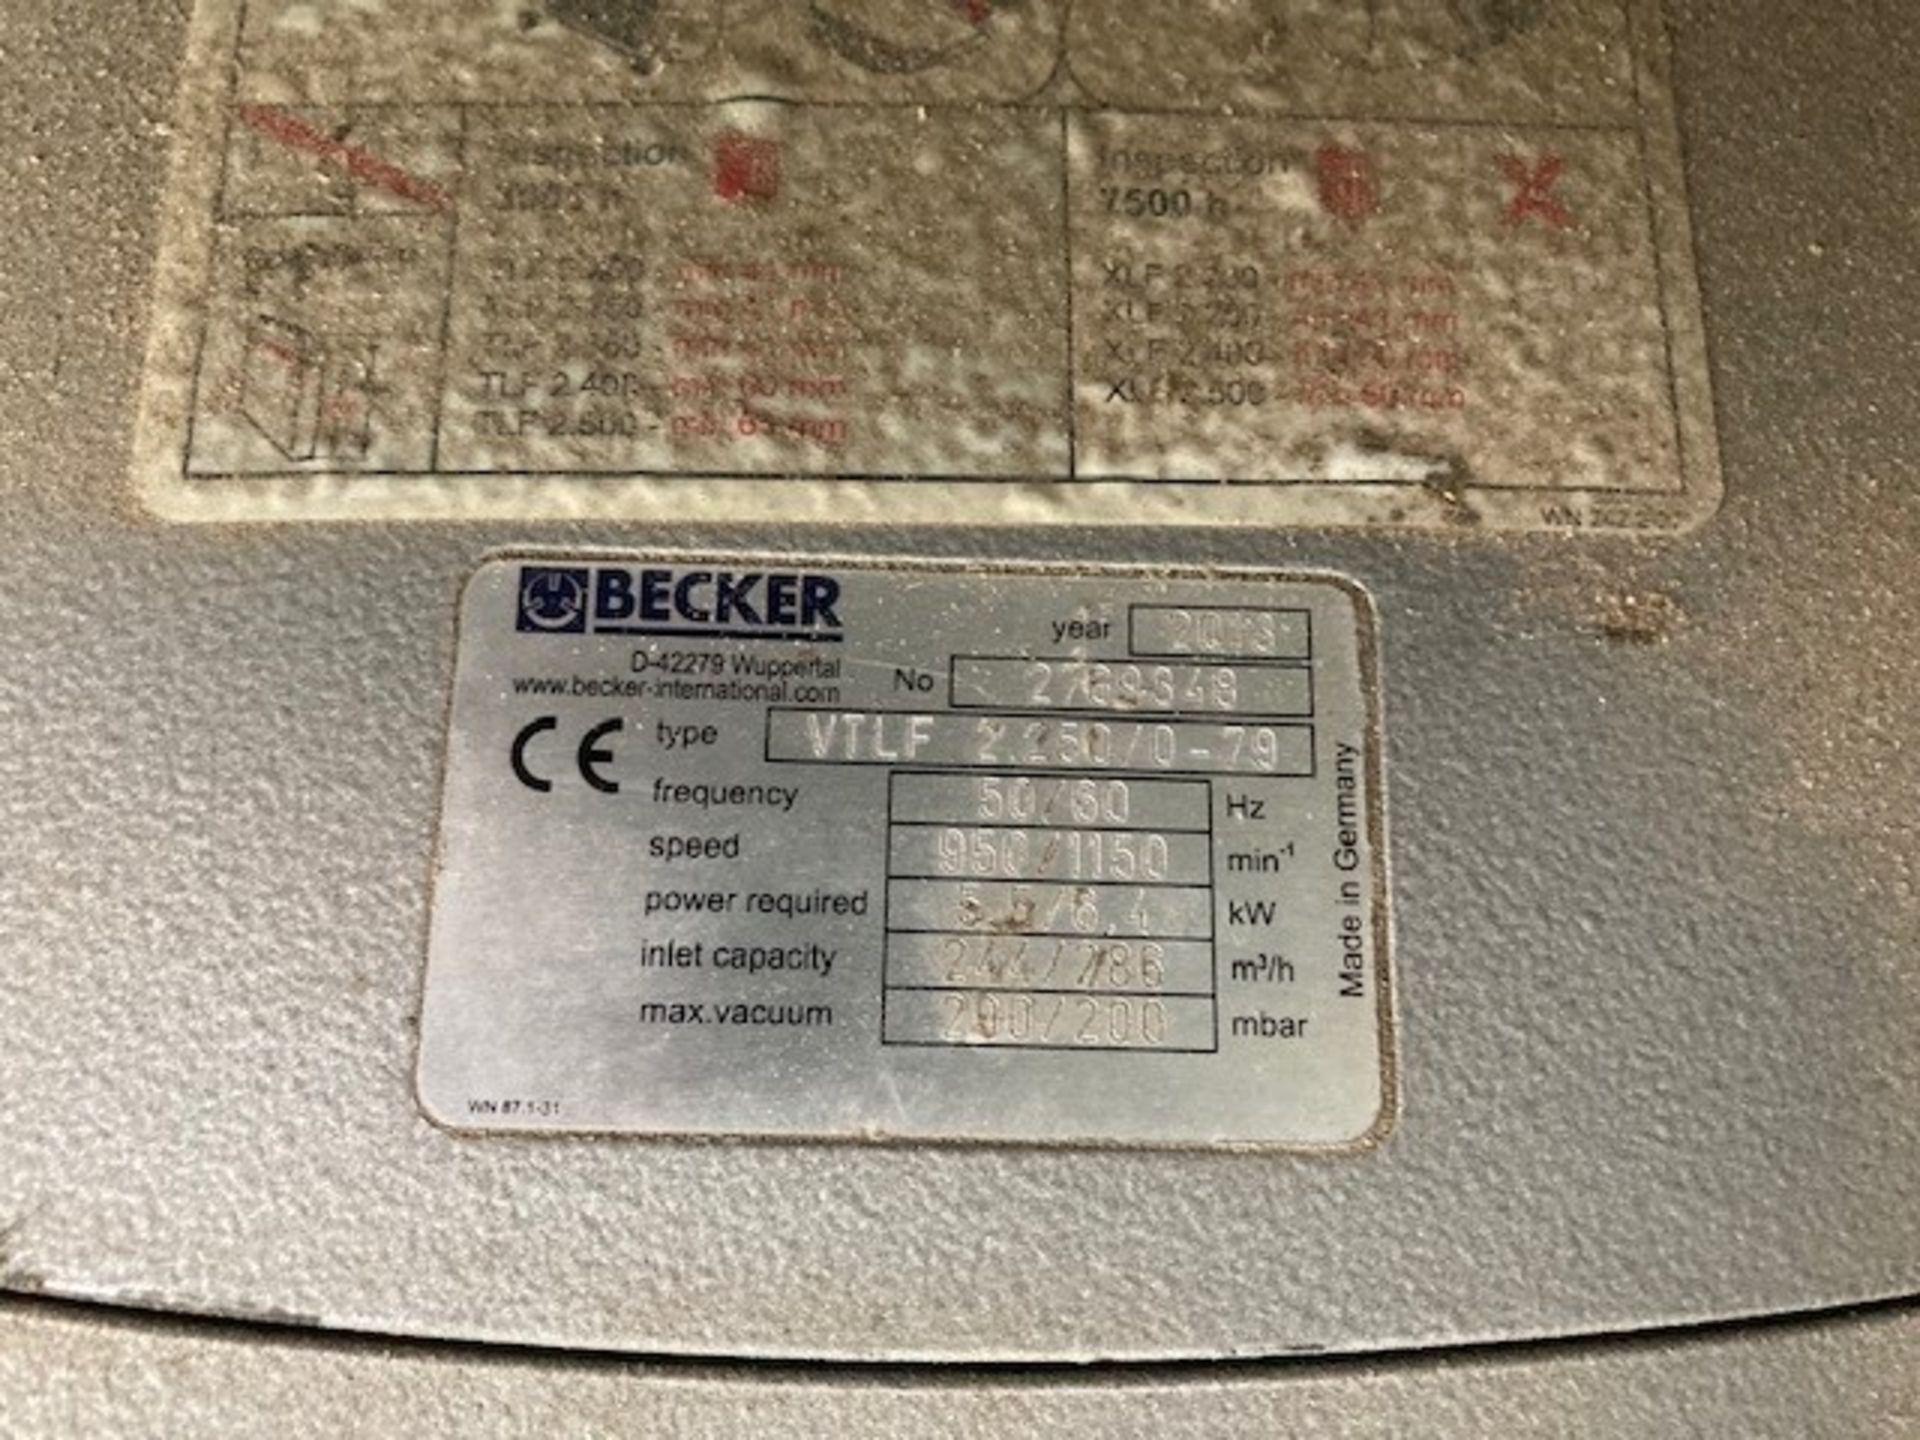 Becker VTLF 2.250 /0-79 Vacuum Pump - Image 4 of 4